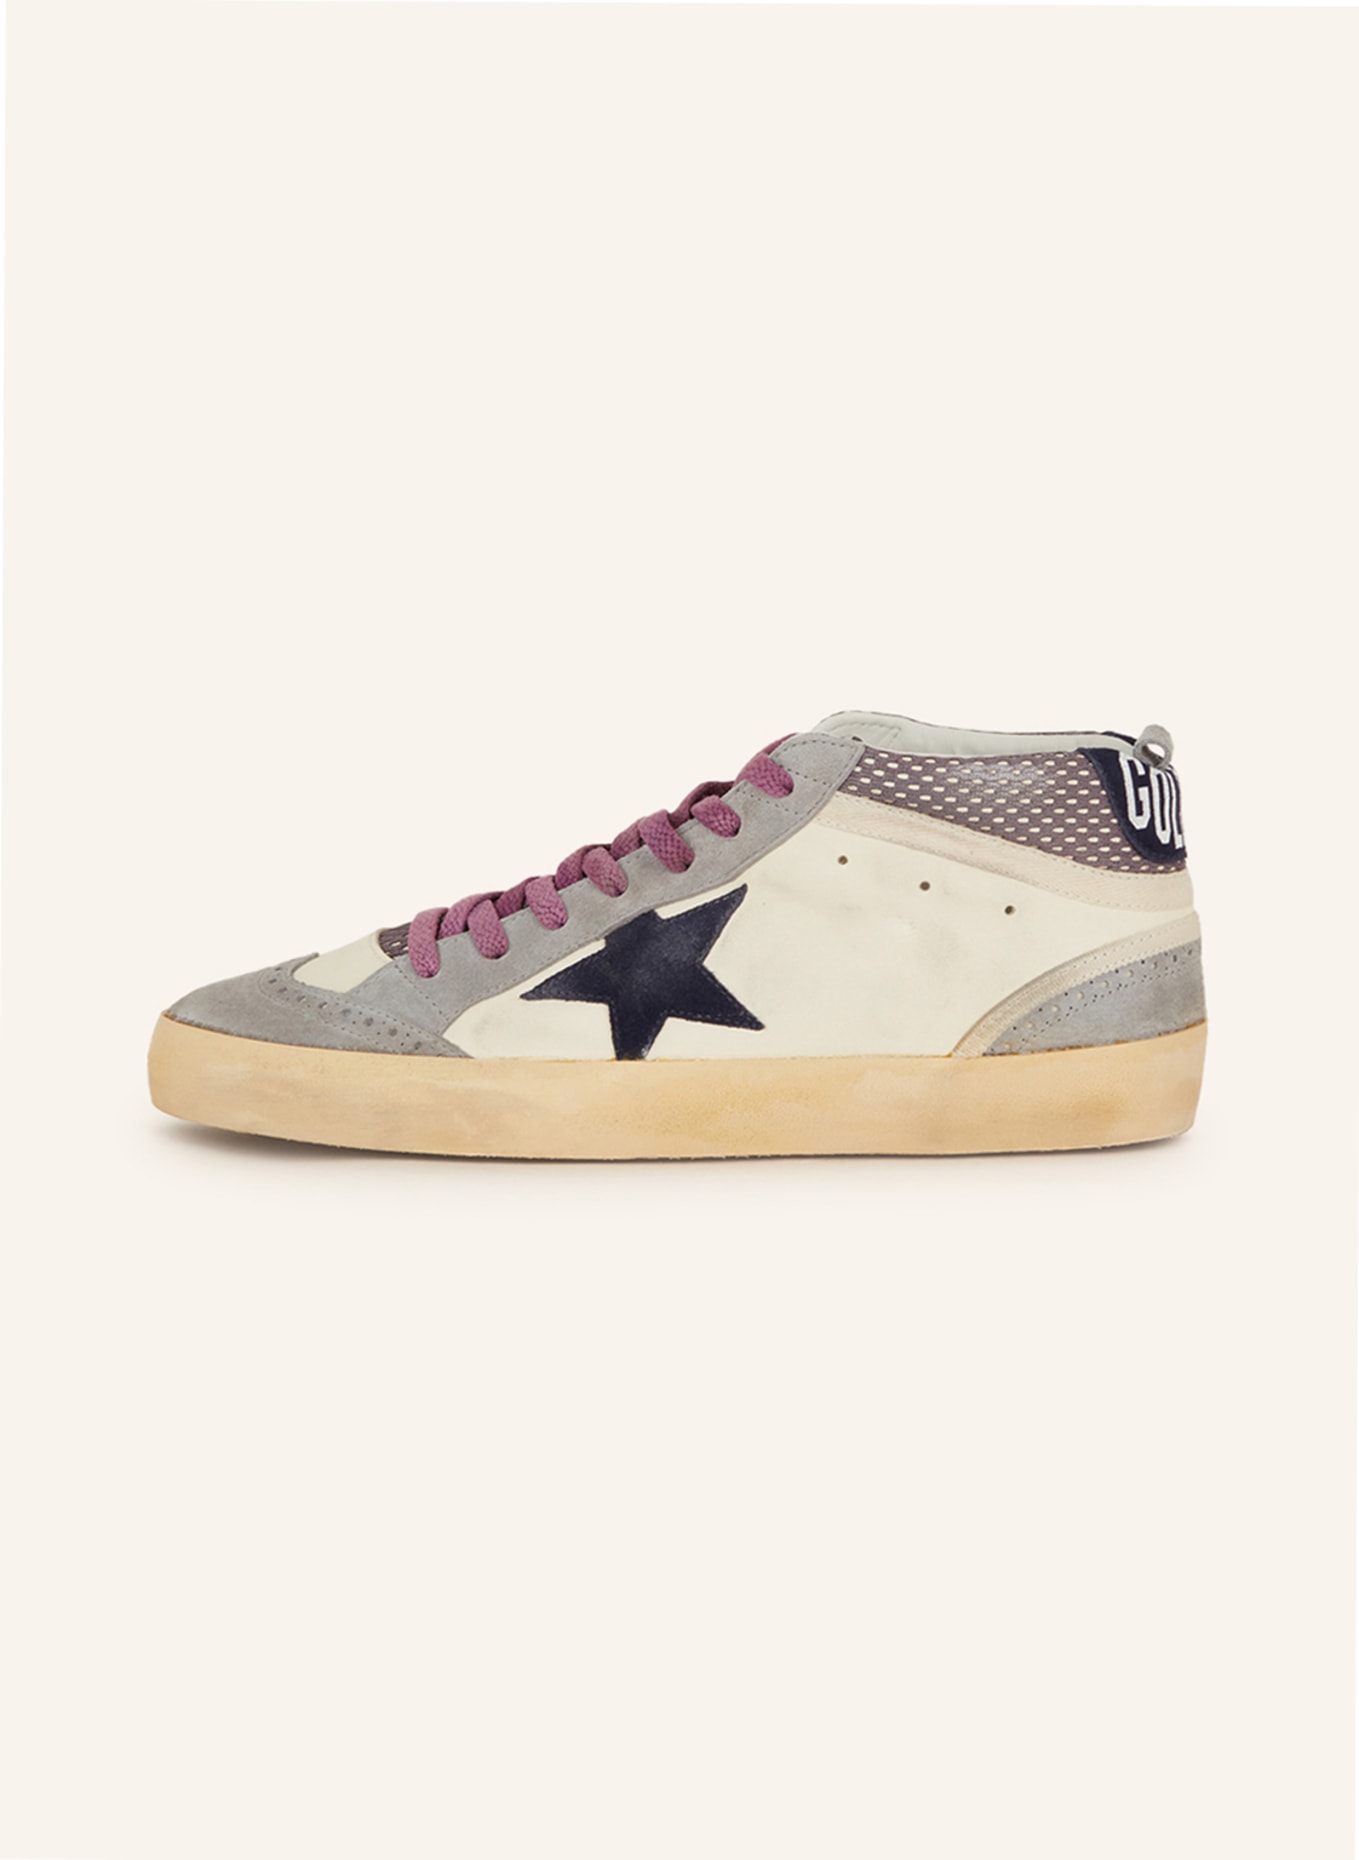 GOLDEN GOOSE Hightop-Sneaker MID STAR, Farbe: CREME/ DUNKELBLAU/ HELLGRAU (Bild 4)